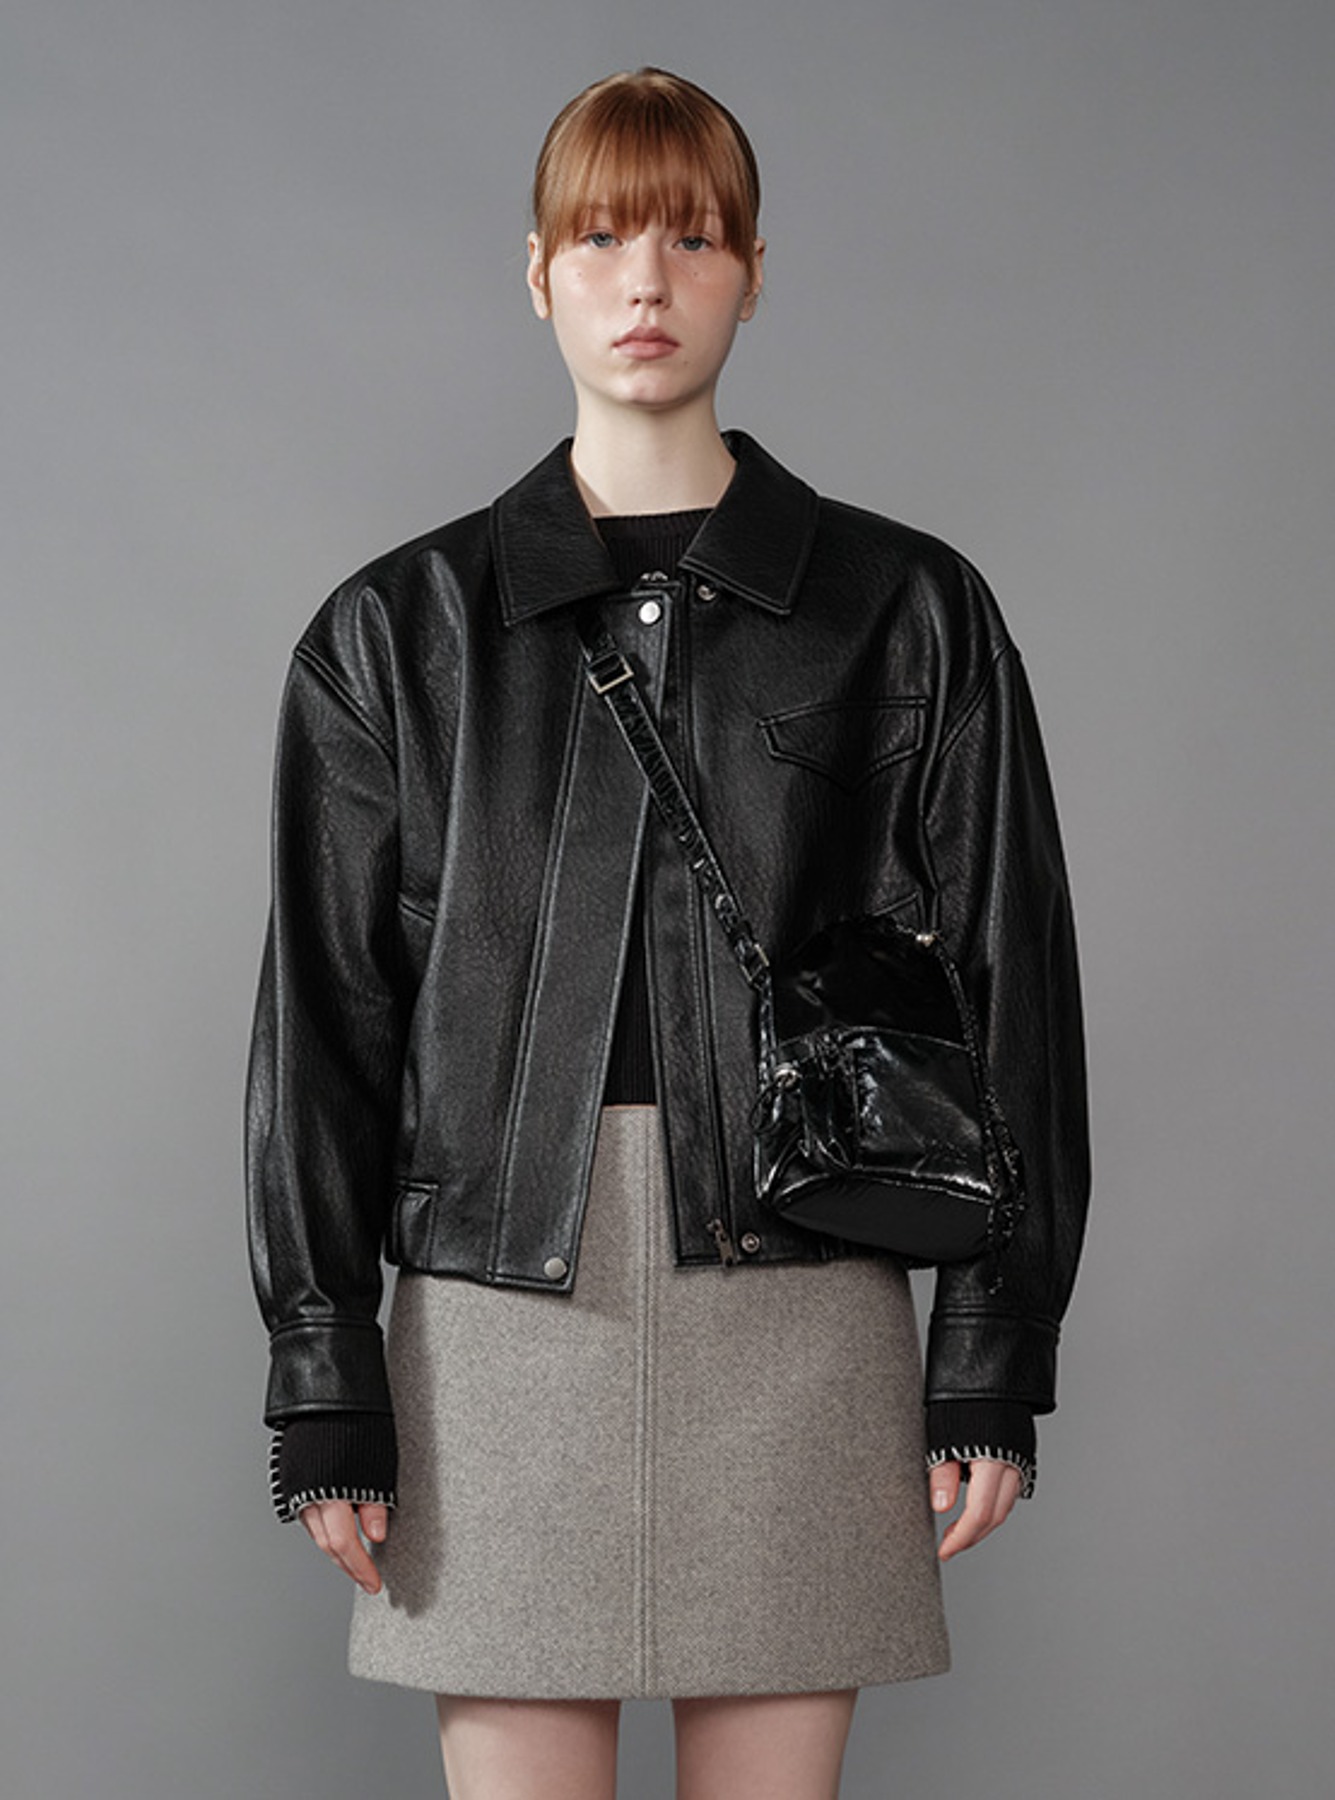 Fake Leather Blouson Jacket in Black VL2AM080-10